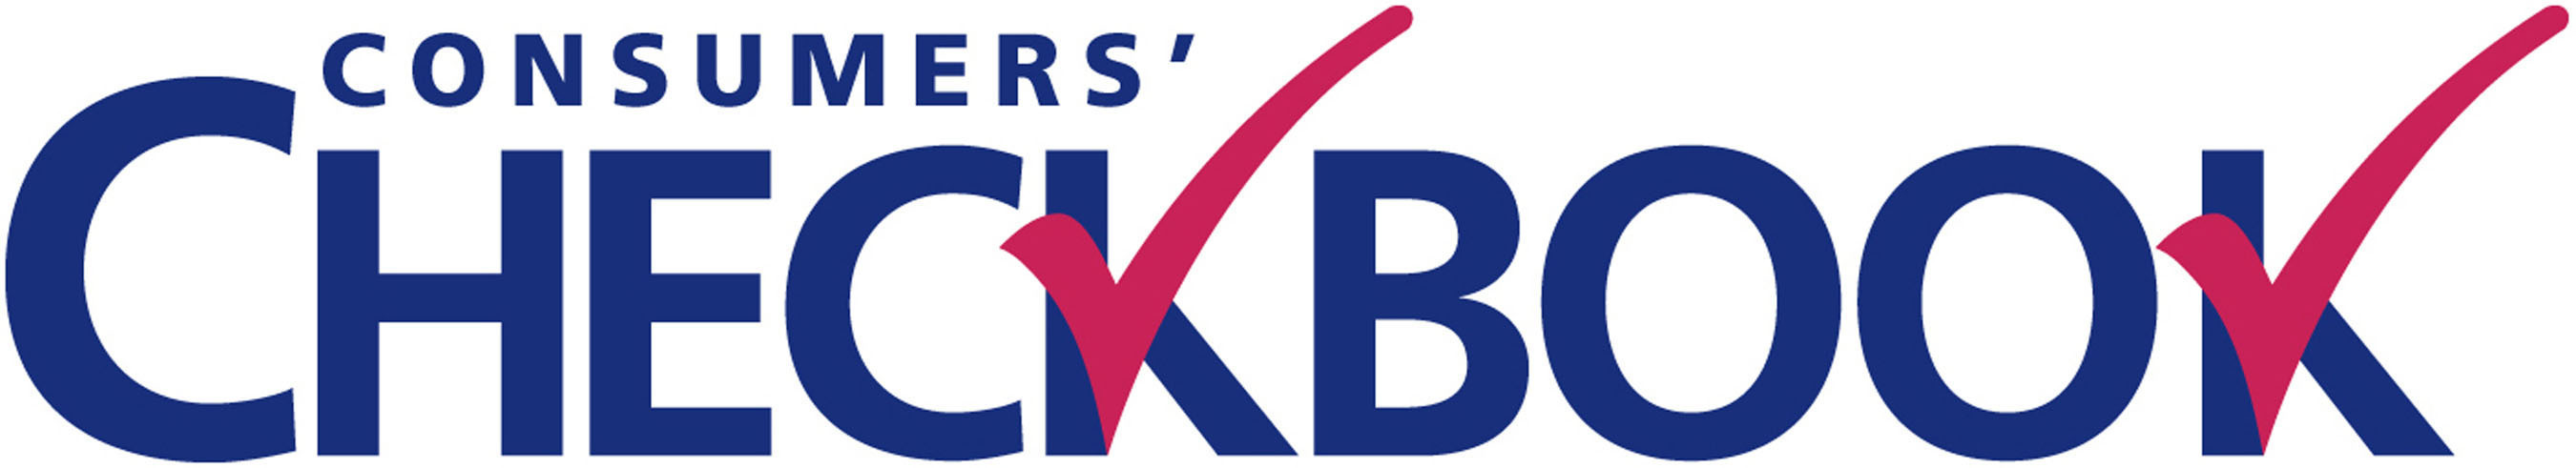 Consumers' CHECKBOOK Logo. (PRNewsFoto/Consumers' CHECKBOOK) (PRNewsFoto/)